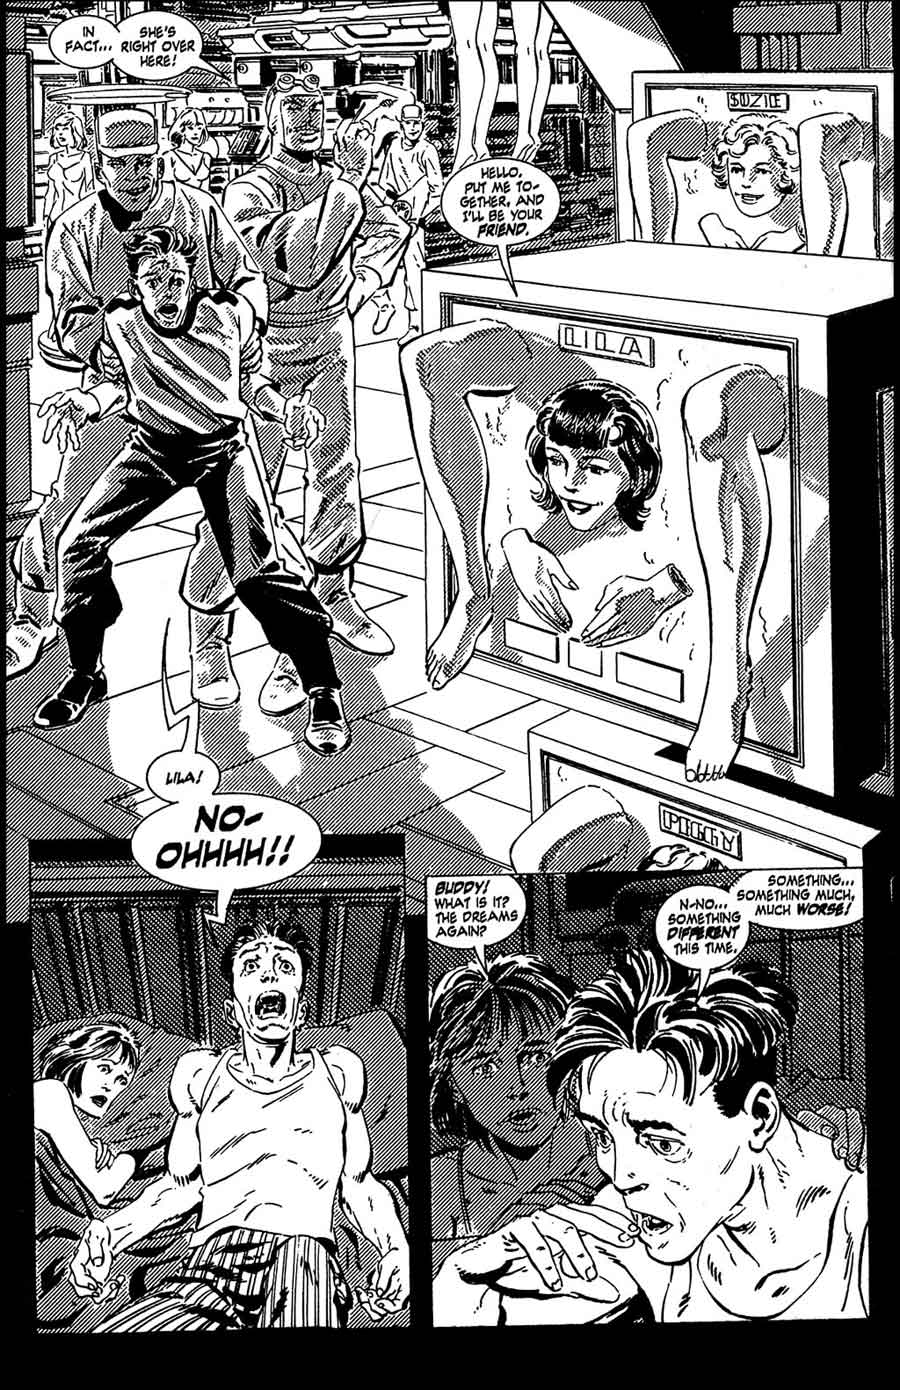 Omac v2 #2 dc 1990s comic book page art by John Byrne